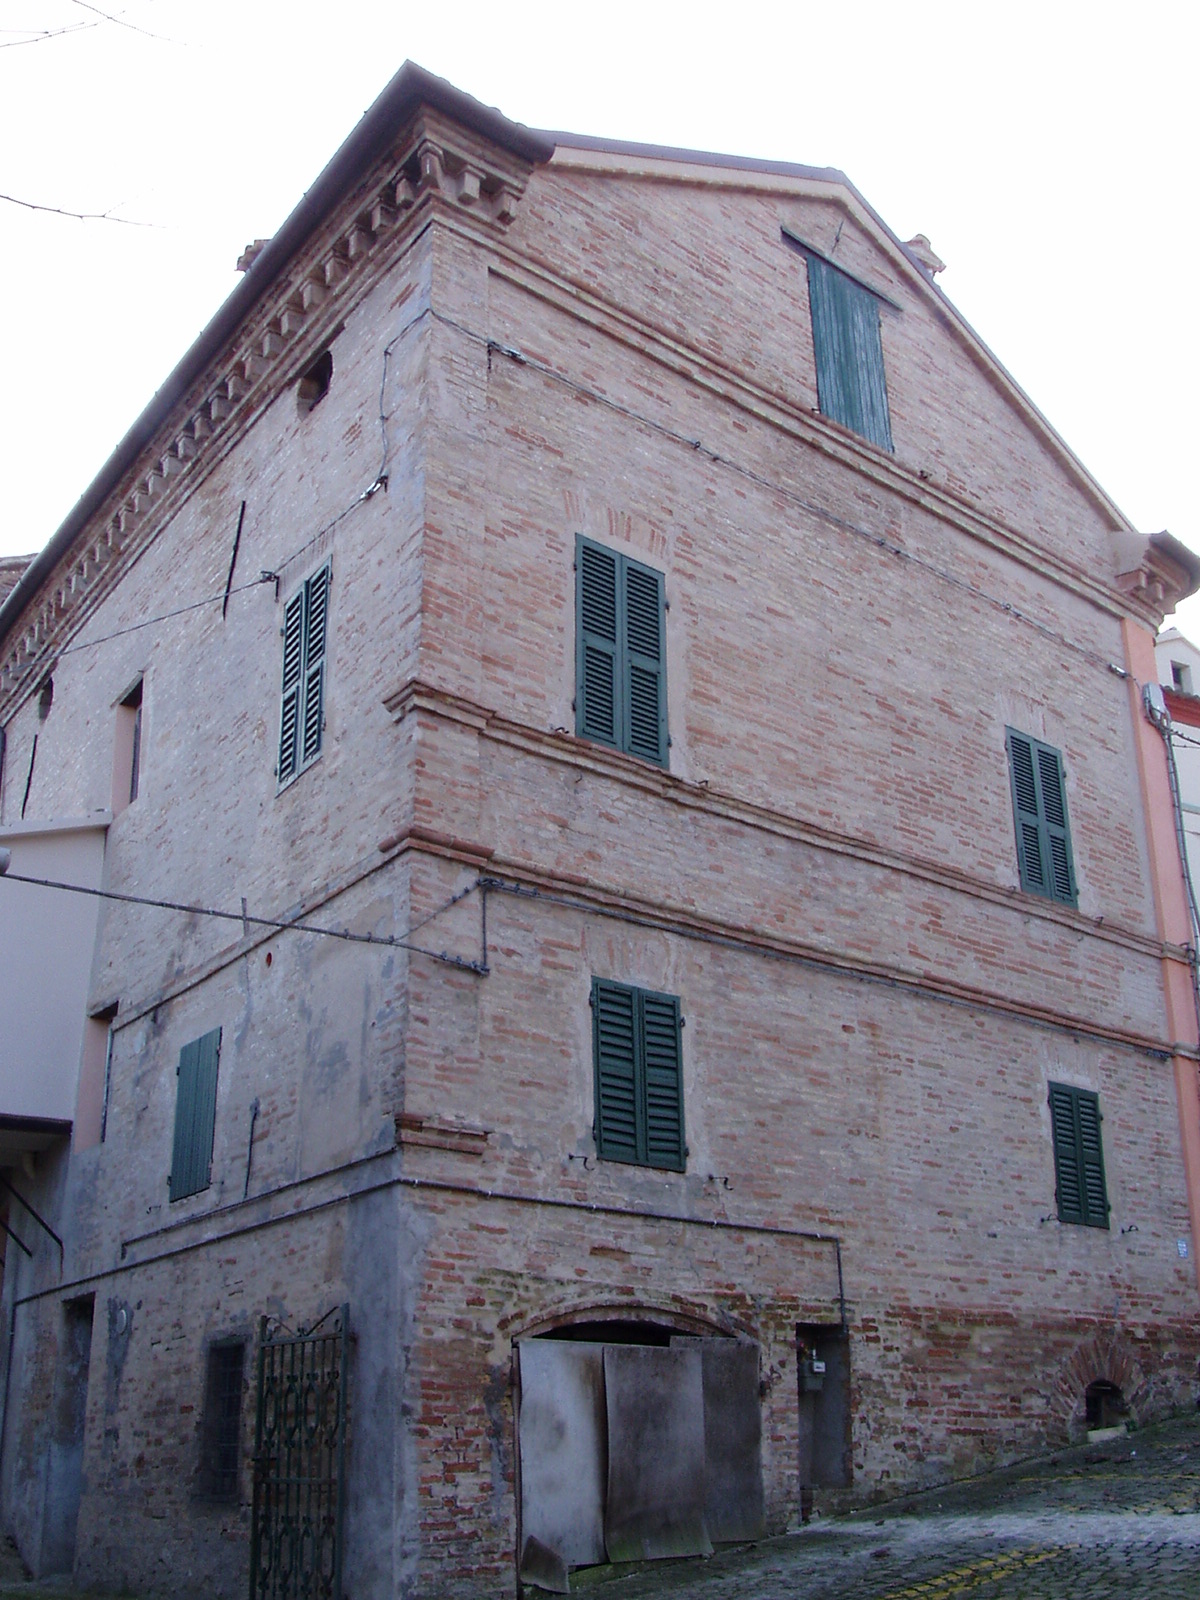 Palazzo d'abitazione (palazzo, d'abitazione) - Santa Maria Nuova (AN) 